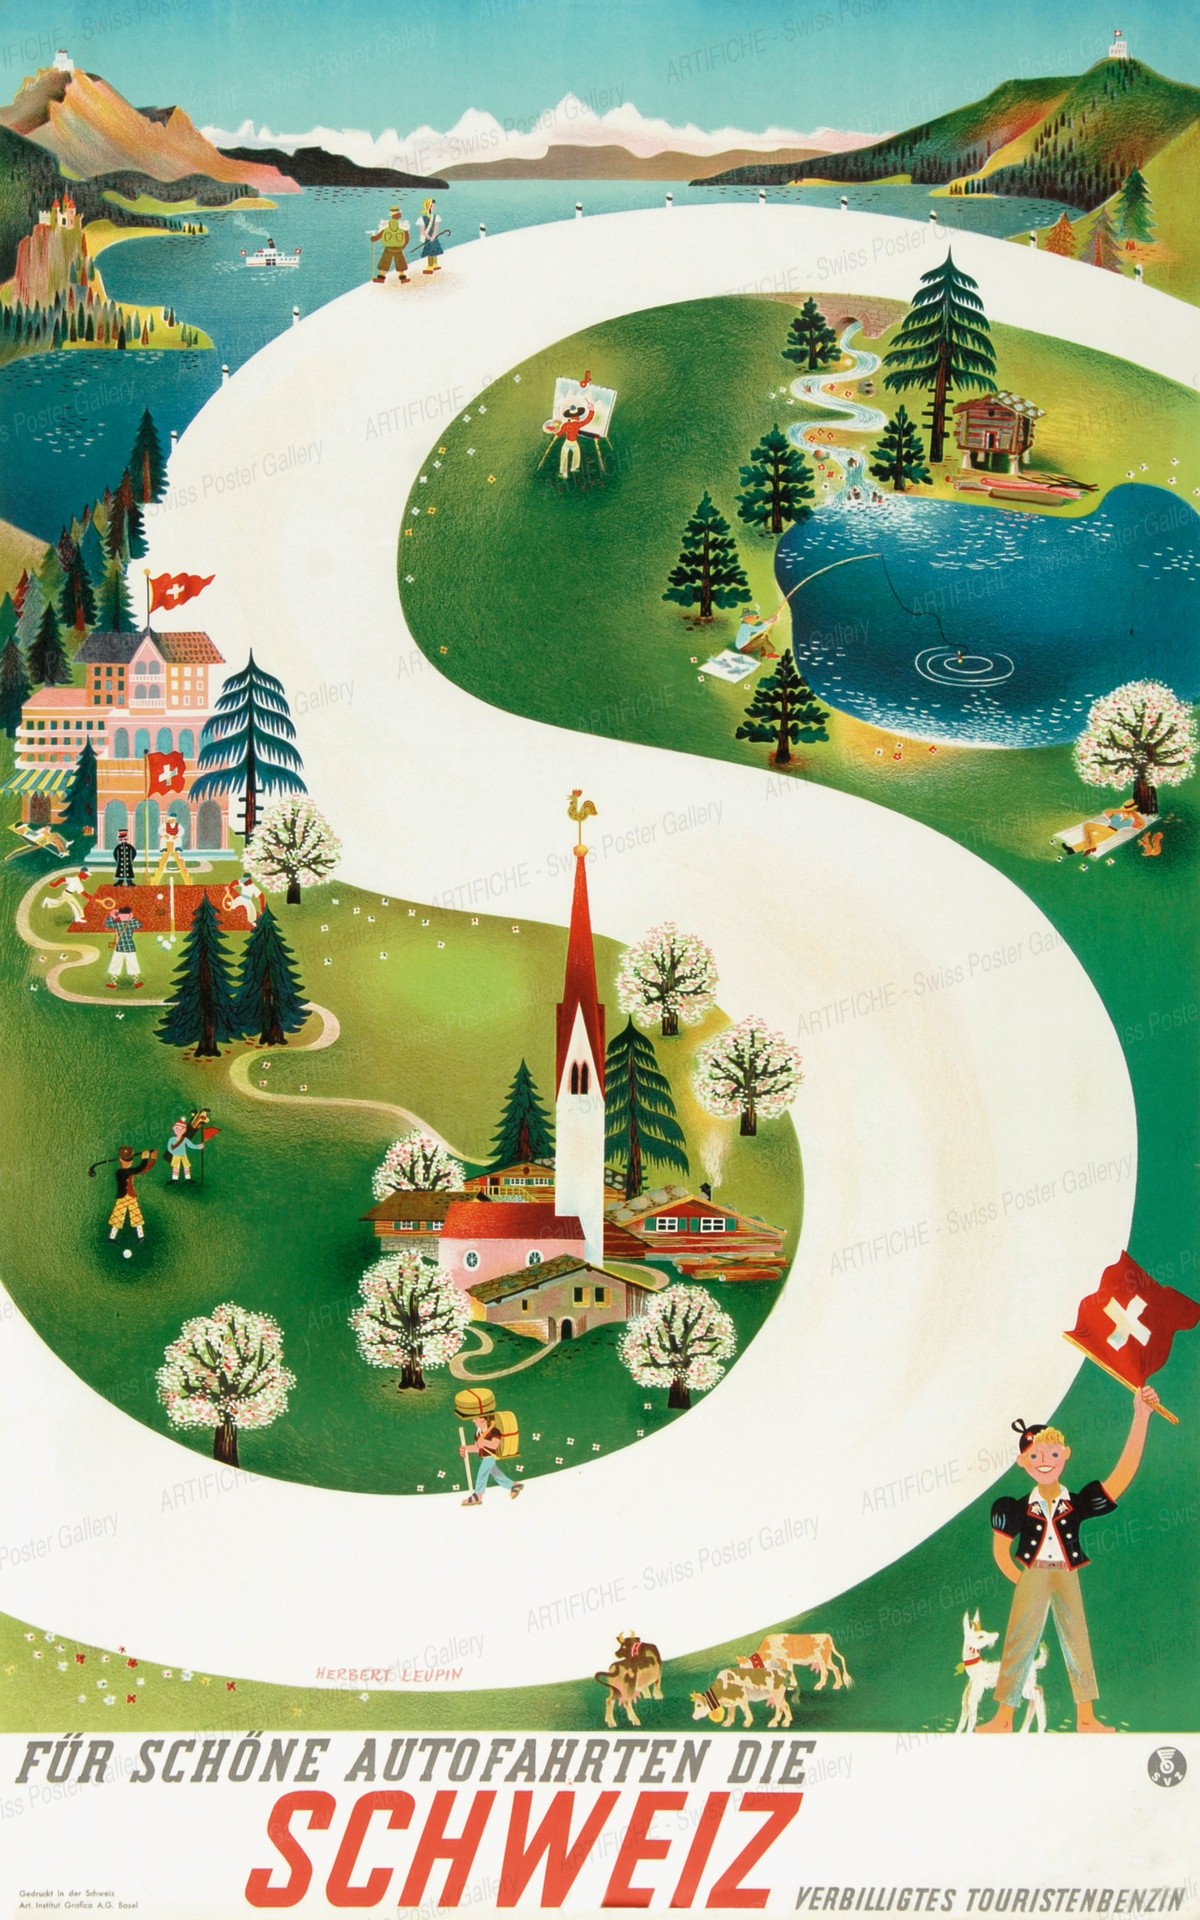 All roads lead to Switzerland, Herbert Leupin